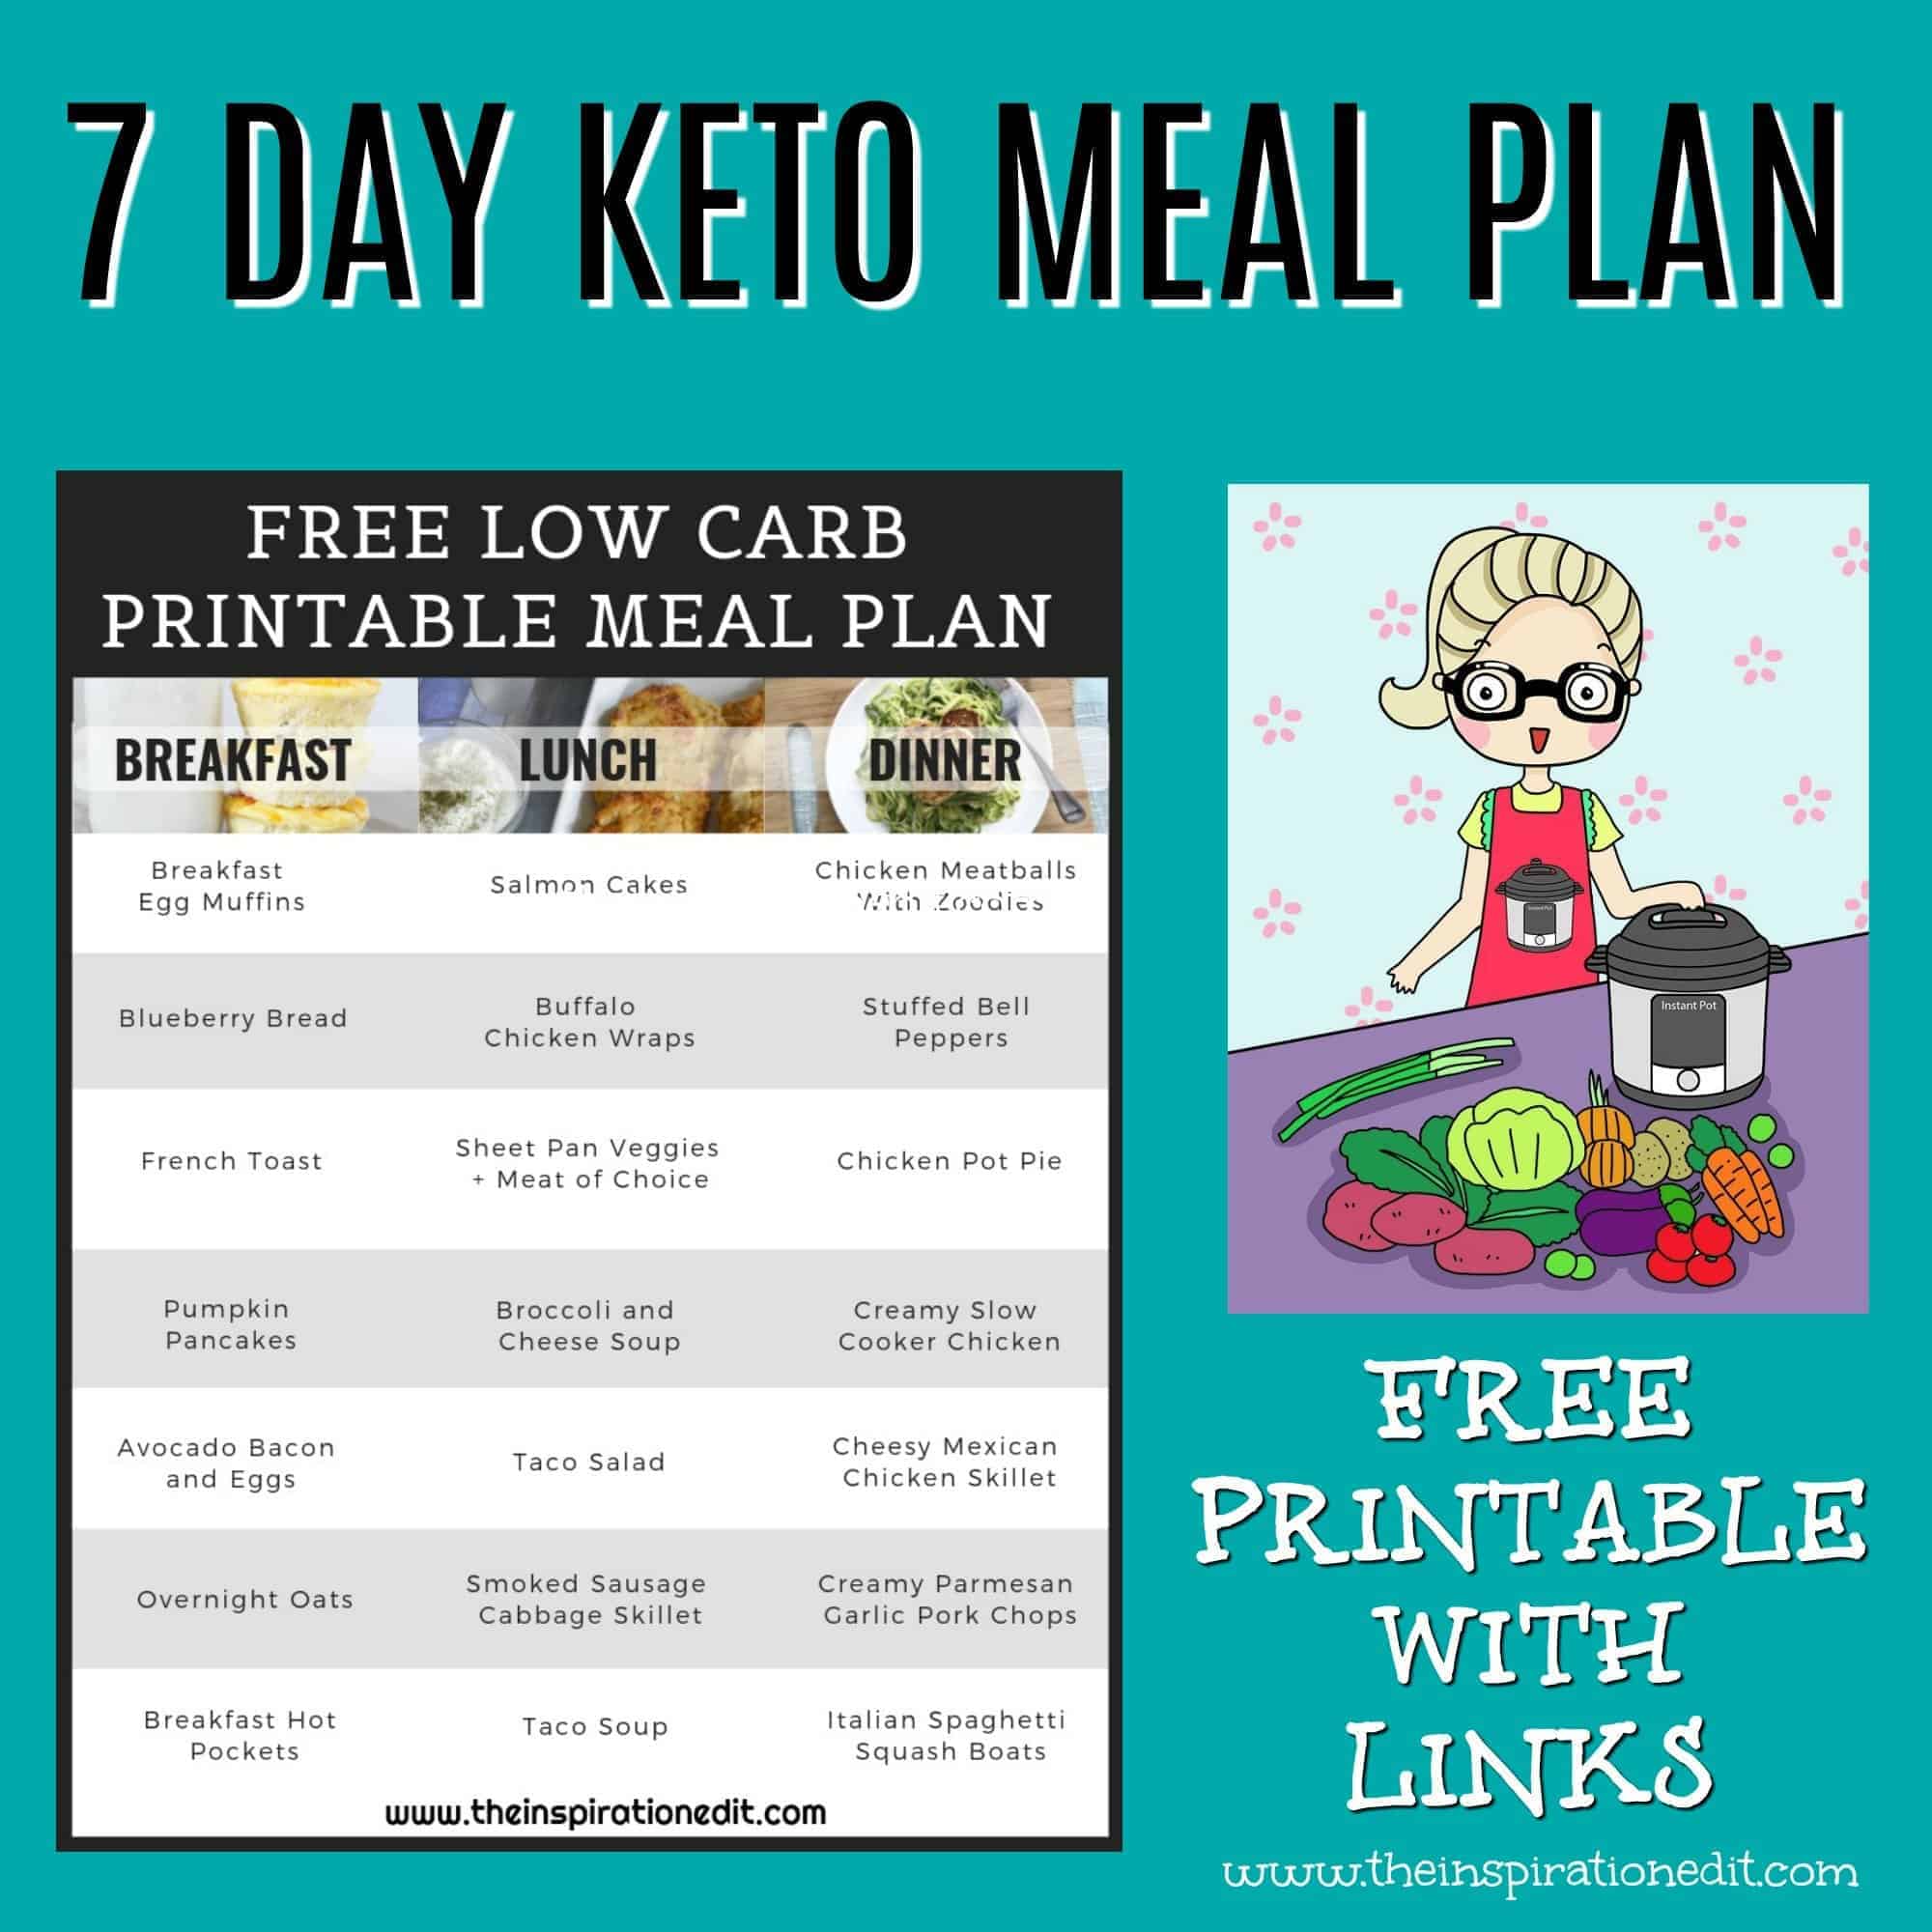 Free Printable 7 Day Keto Meal Plan FREE PRINTABLE TEMPLATES